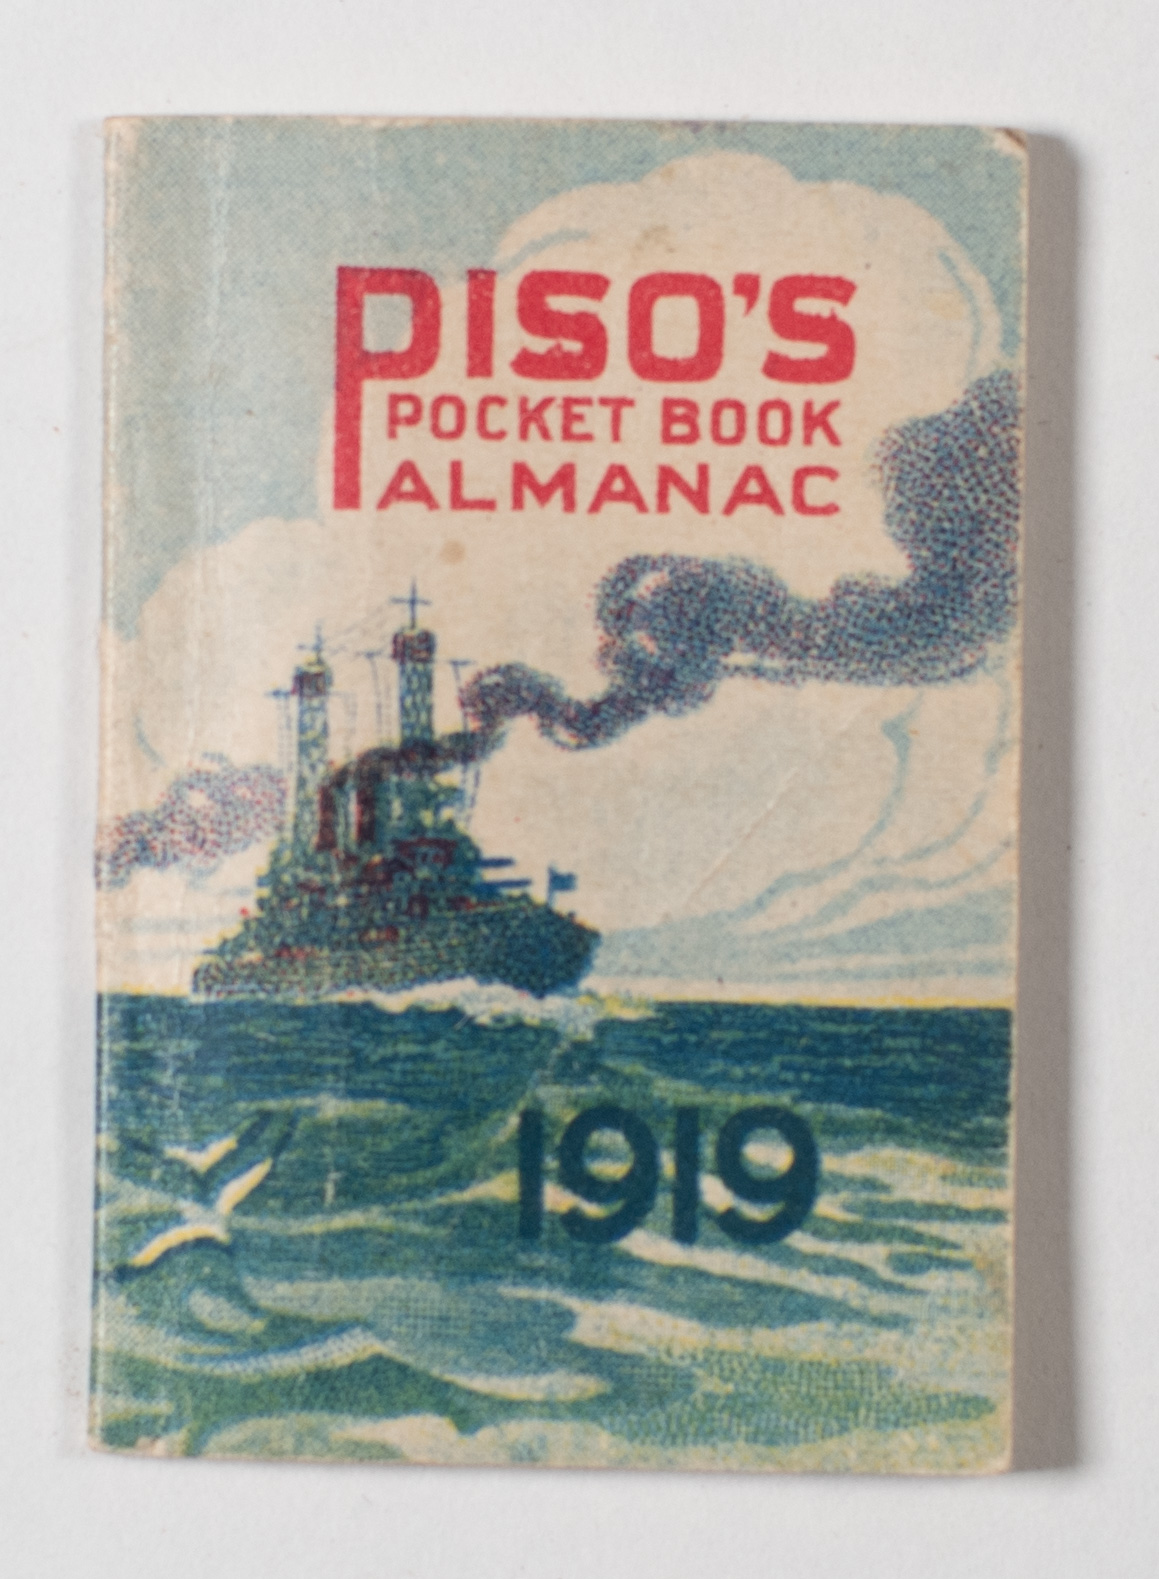 Piso's Pocket Book Almanac - 1919-image